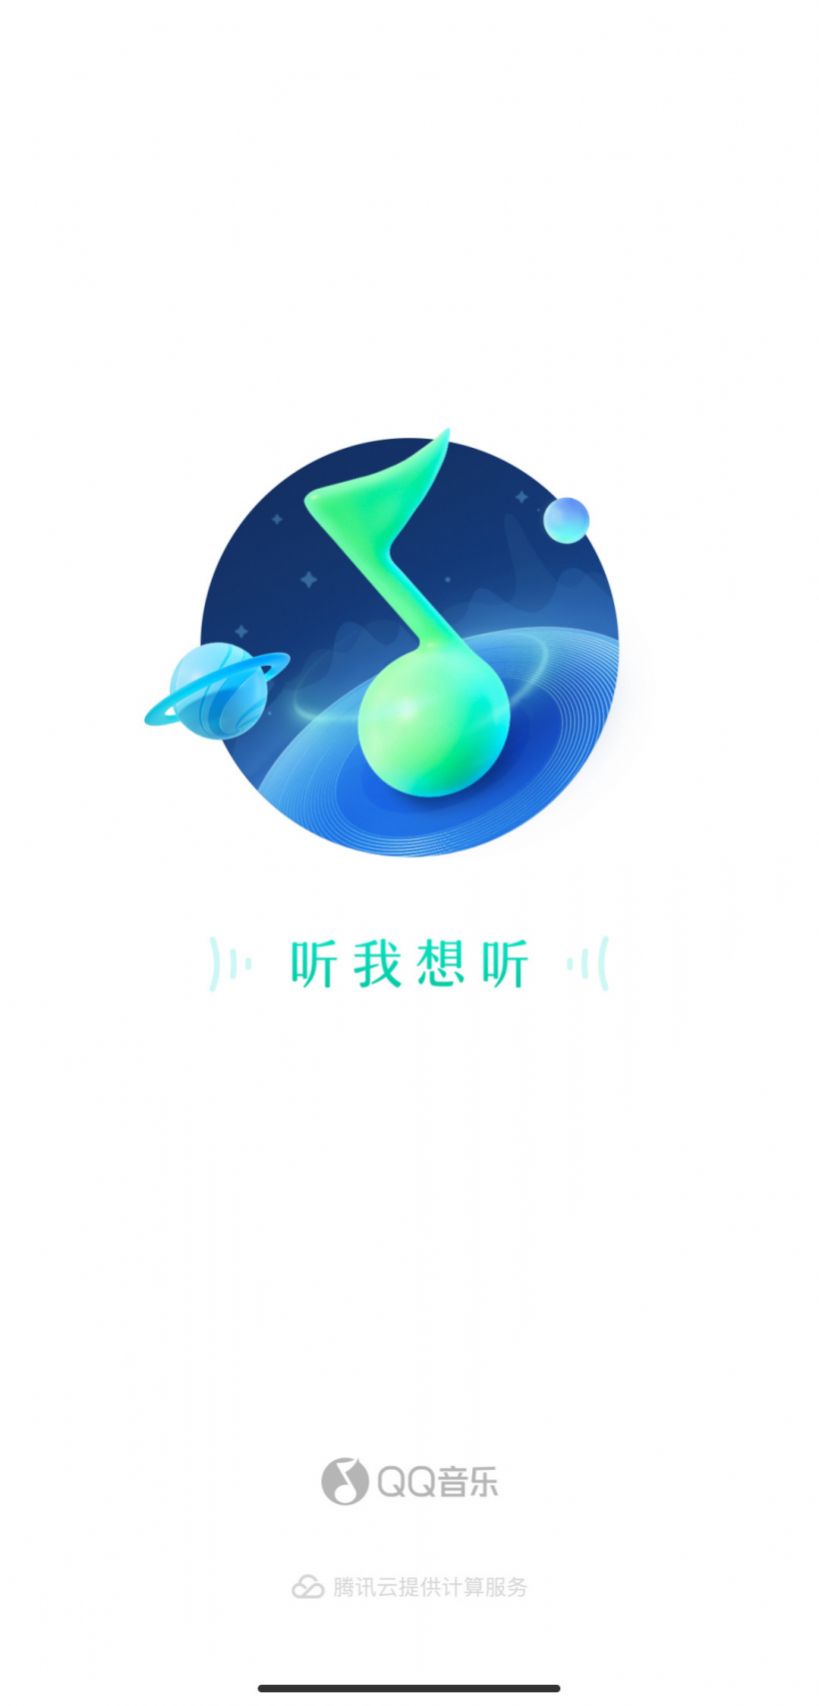 QQ音乐无缝播放功能下载官方最新版图1: